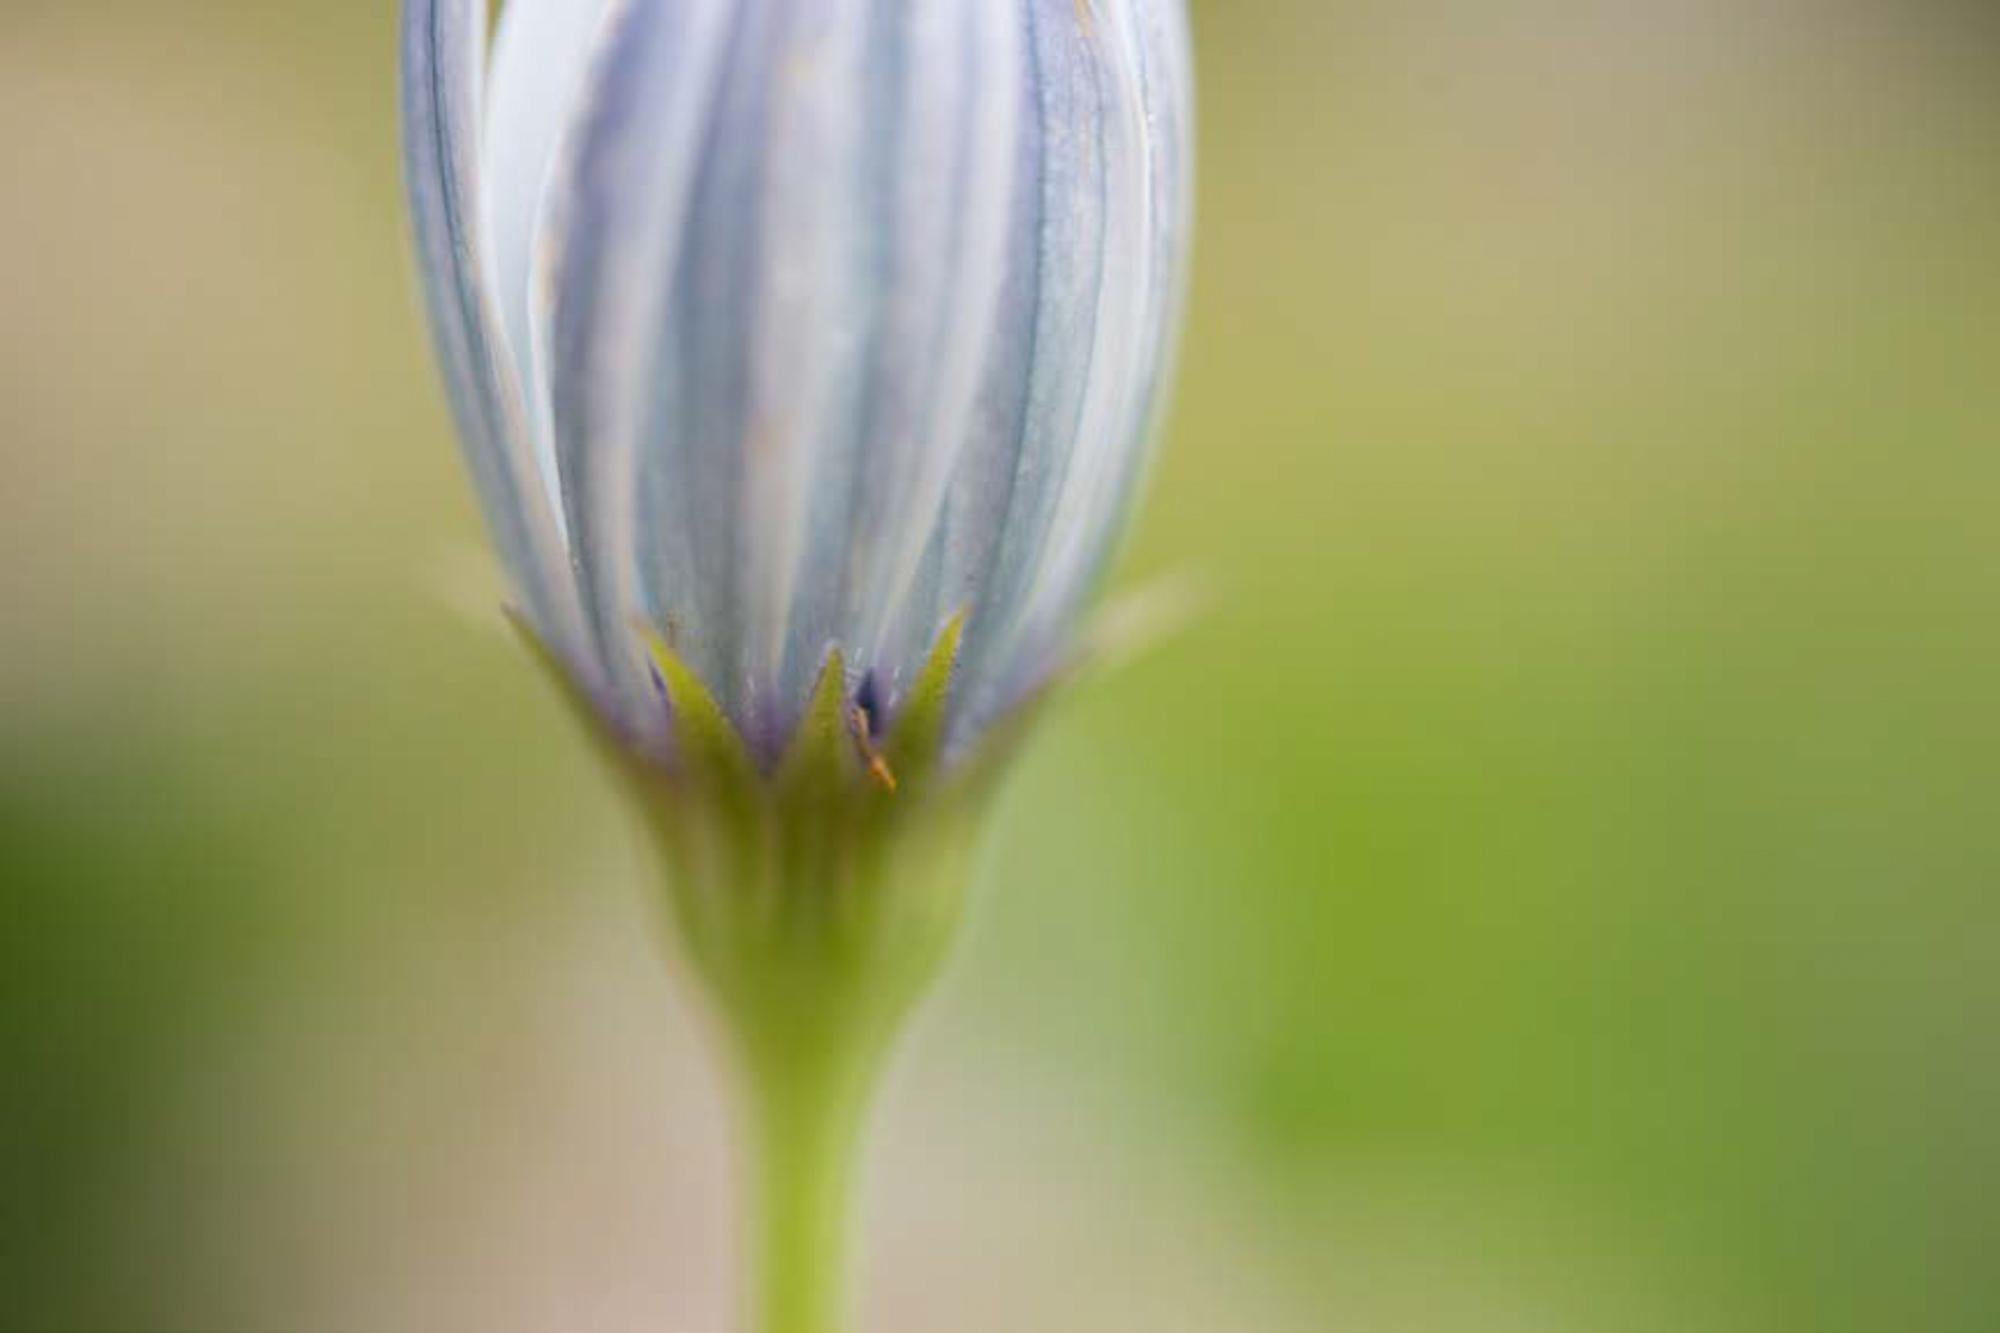 Michal Greenboim Color Photograph - Close Up Color Nature Photographic Print, "Flower" 2015